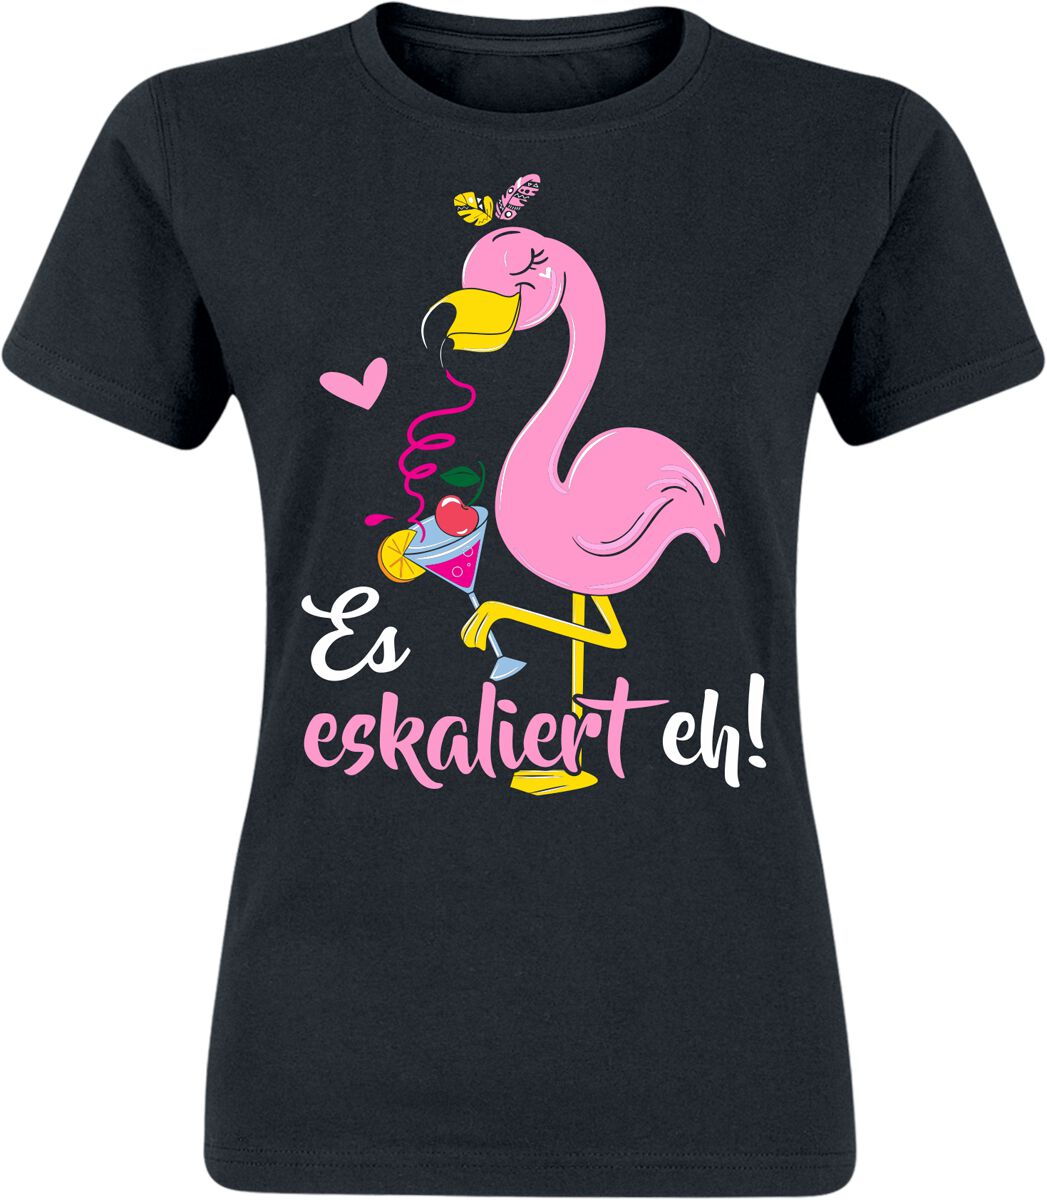 Alkohol & Party Flamingo - Es eskaliert eh! T-Shirt schwarz in S